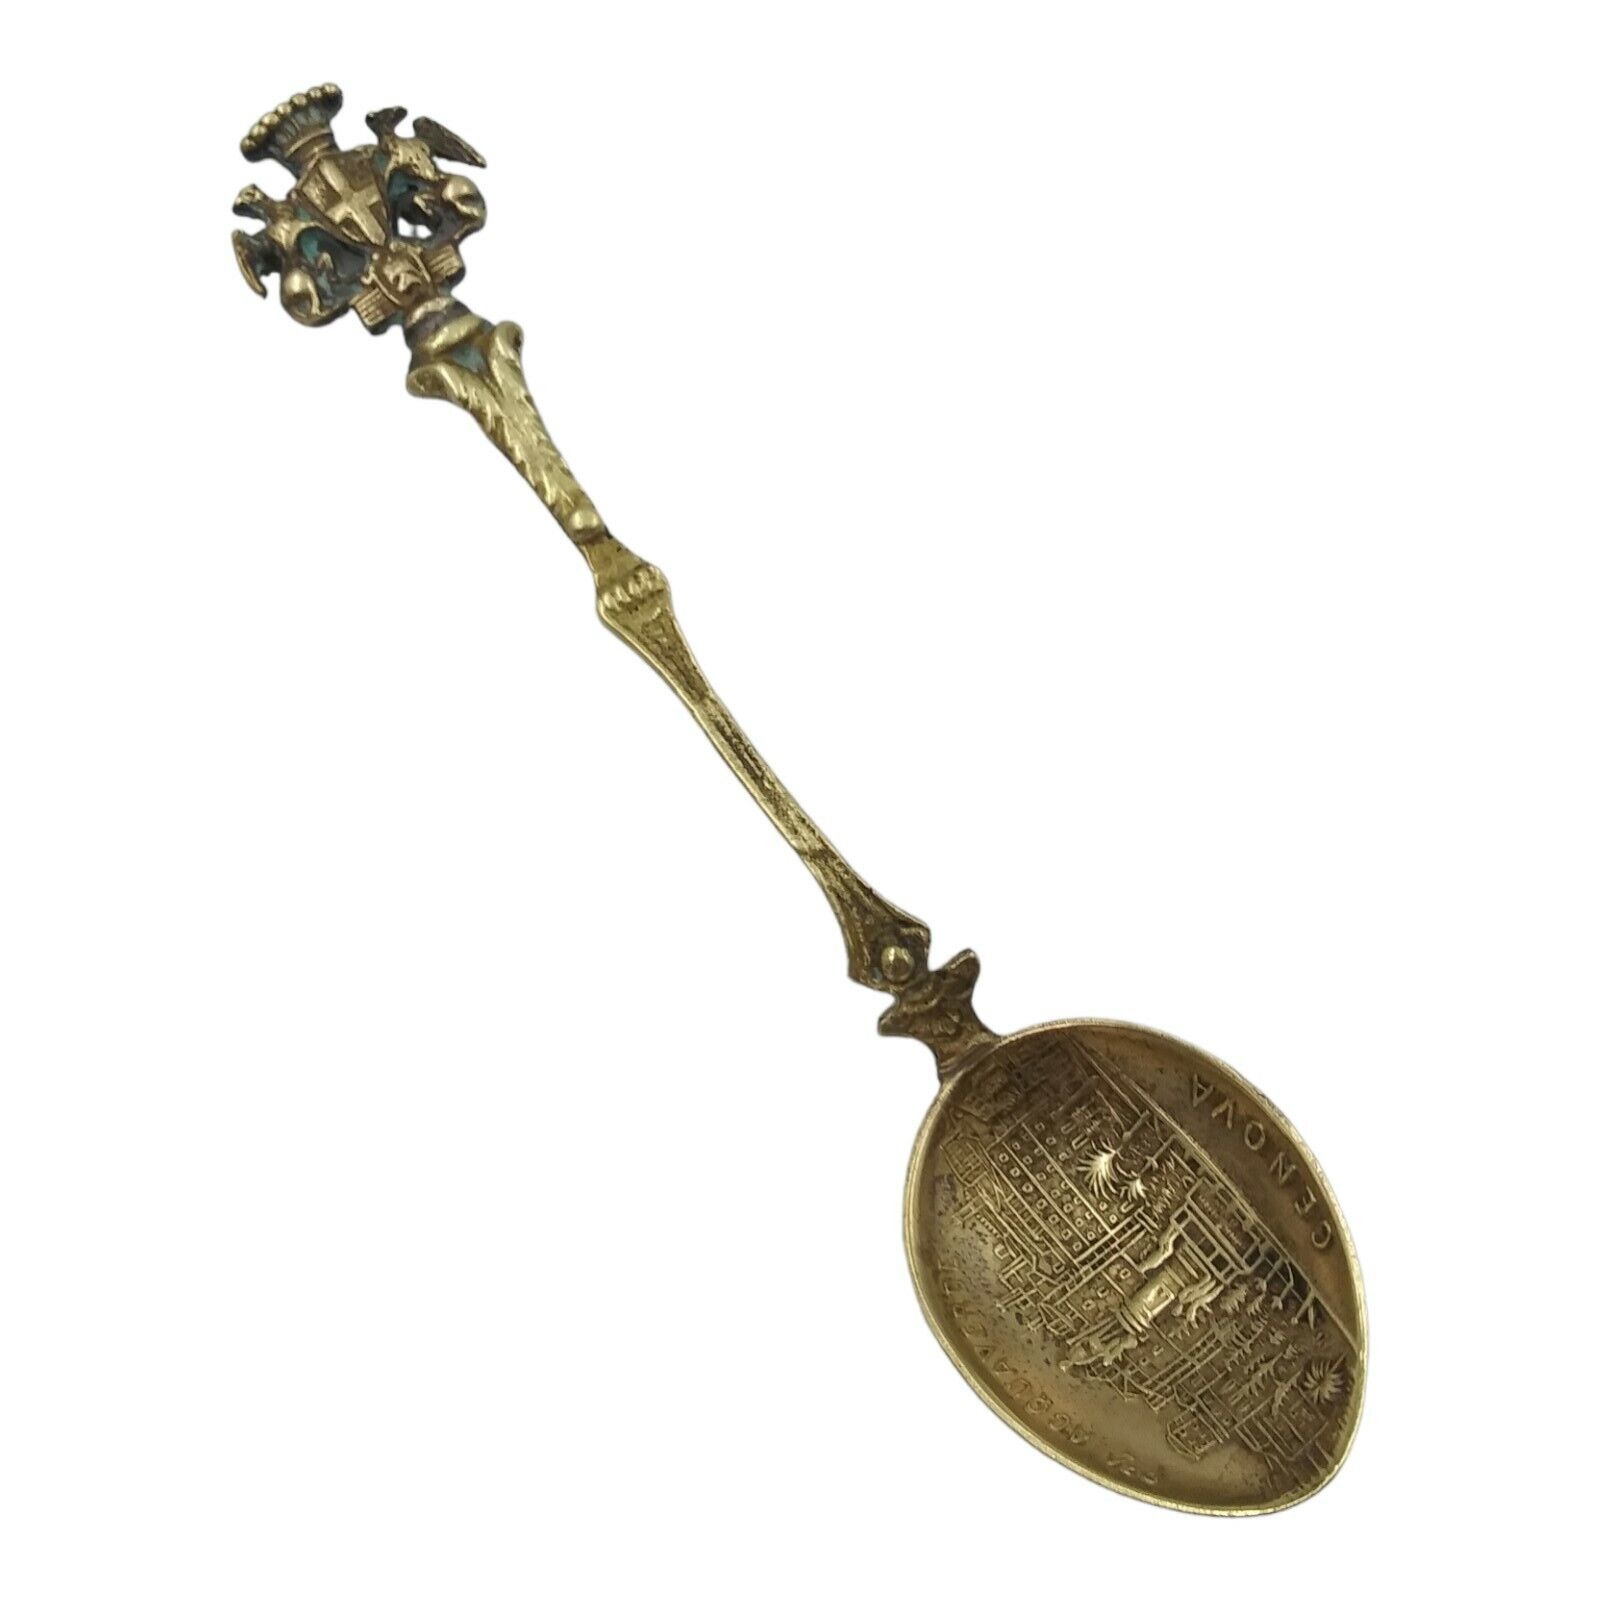 Vintage Piazza Acquaverde Genova Italy Souvenir Spoon Collectible Brass Ornate